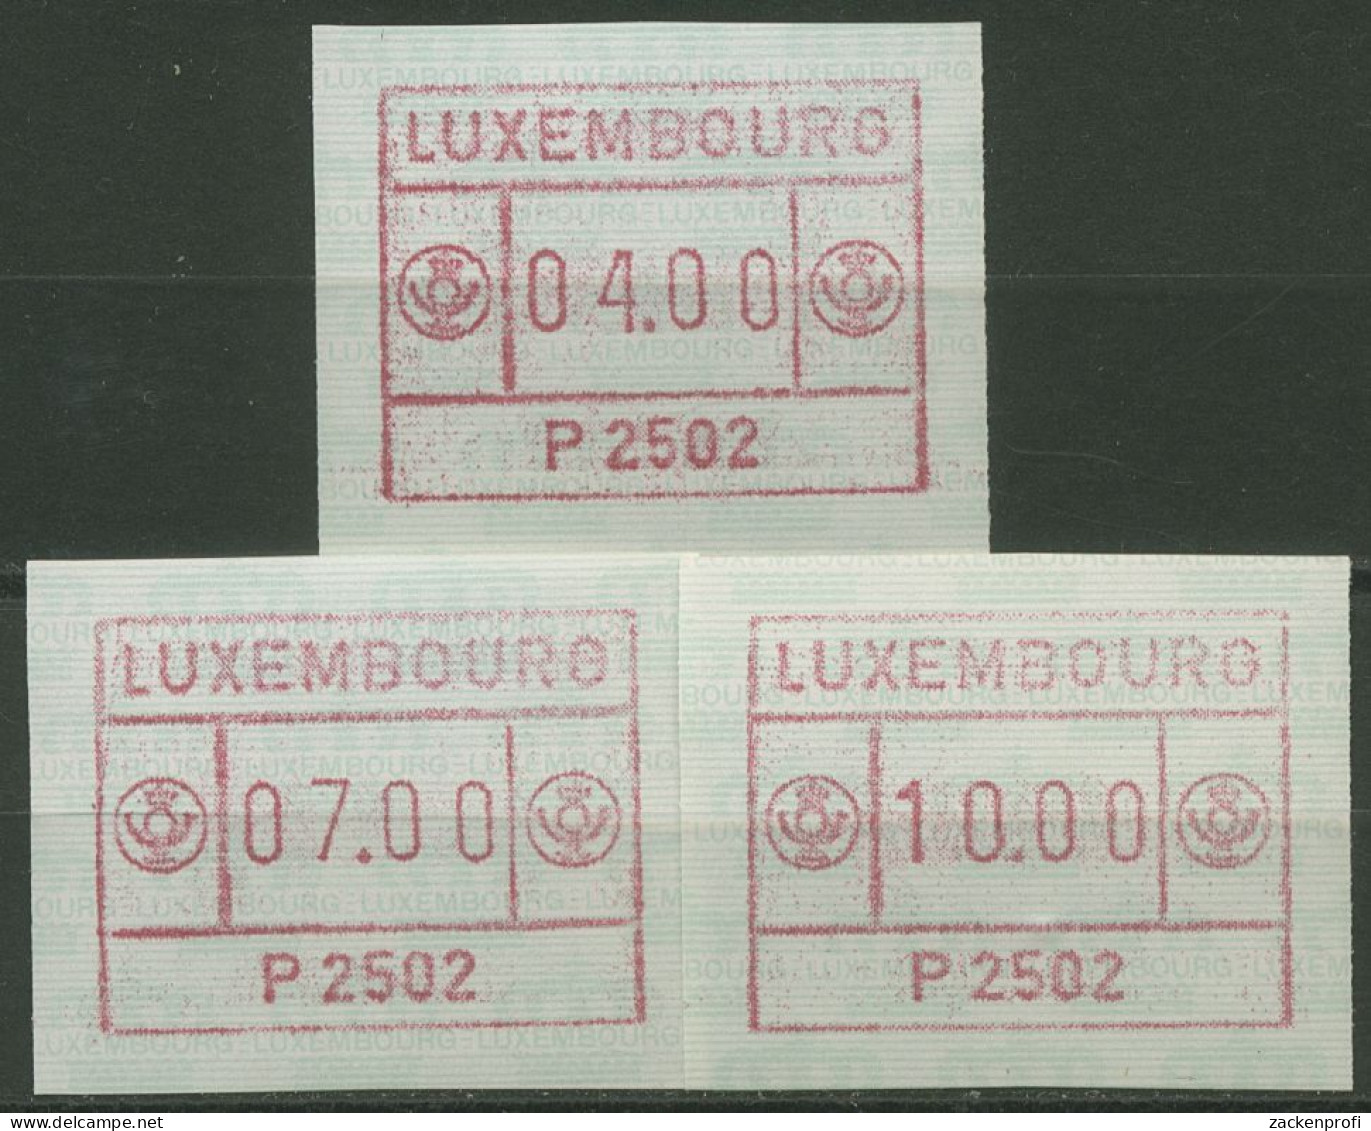 Luxemburg 1983 Automatenmarke Automat P 2502 Satz 1.2.1 B S1 Postfrisch - Vignettes D'affranchissement